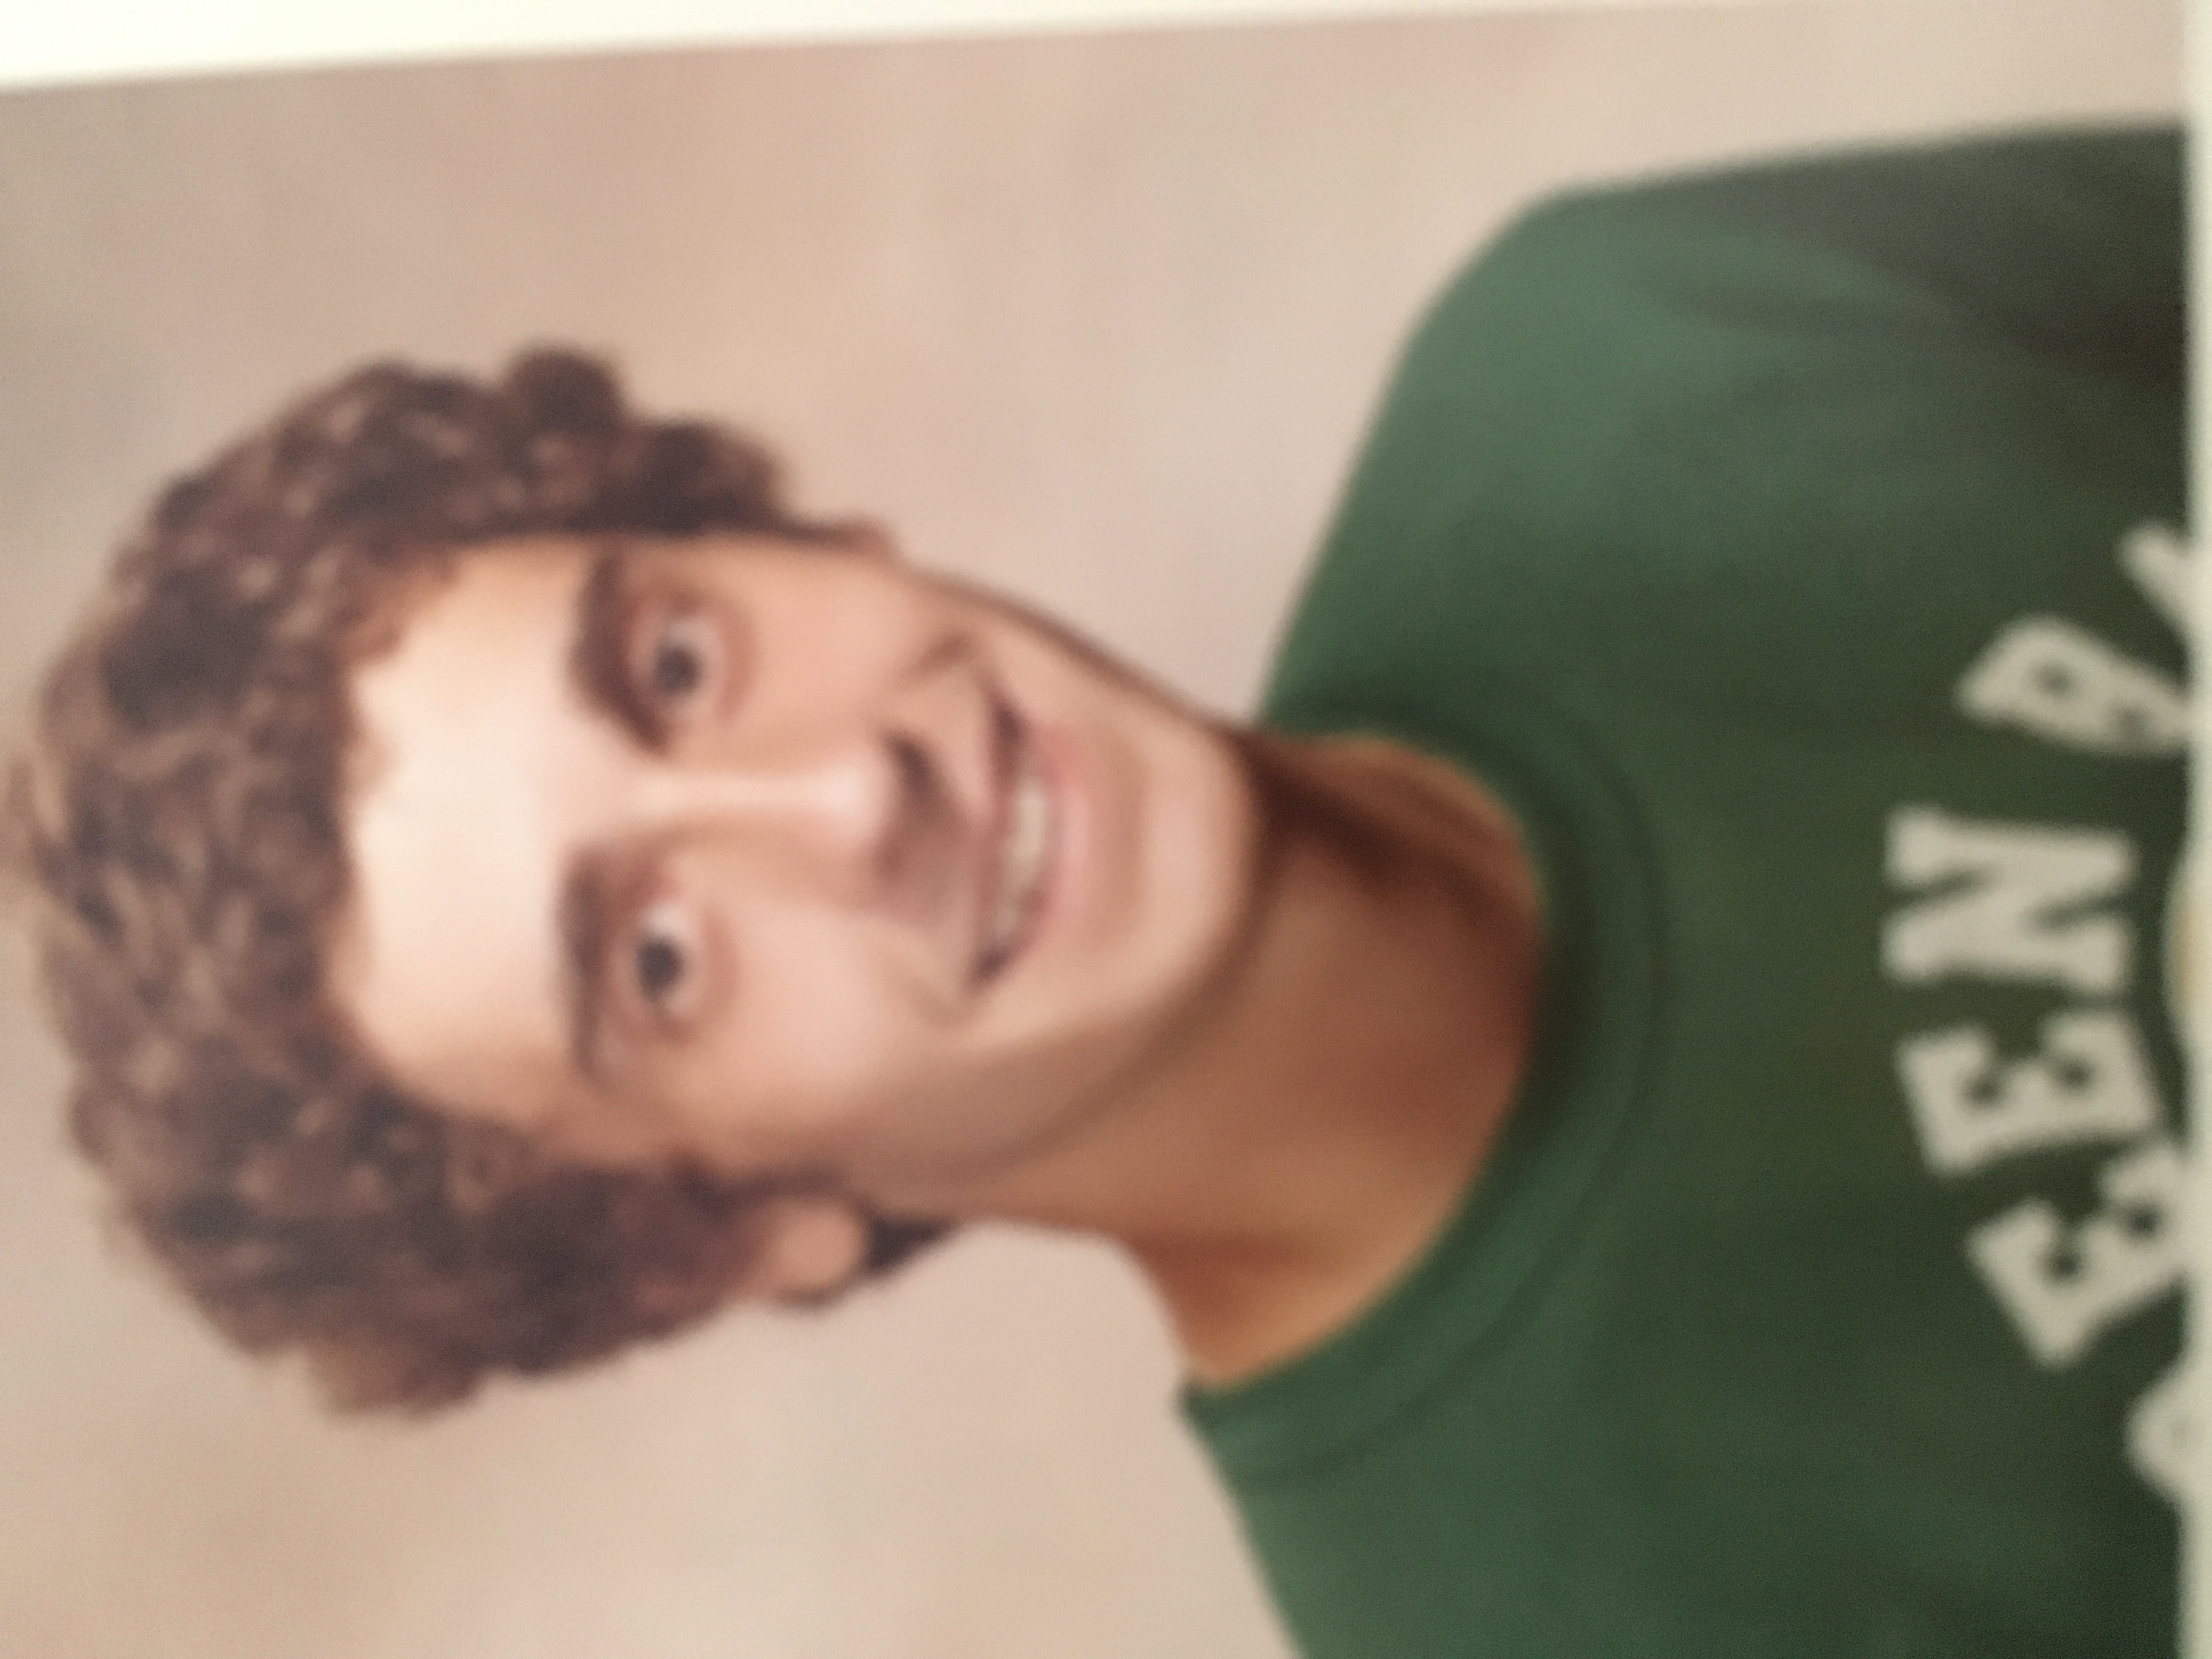 Principal as high school student wearing green sweatshirt, with brown curly hair